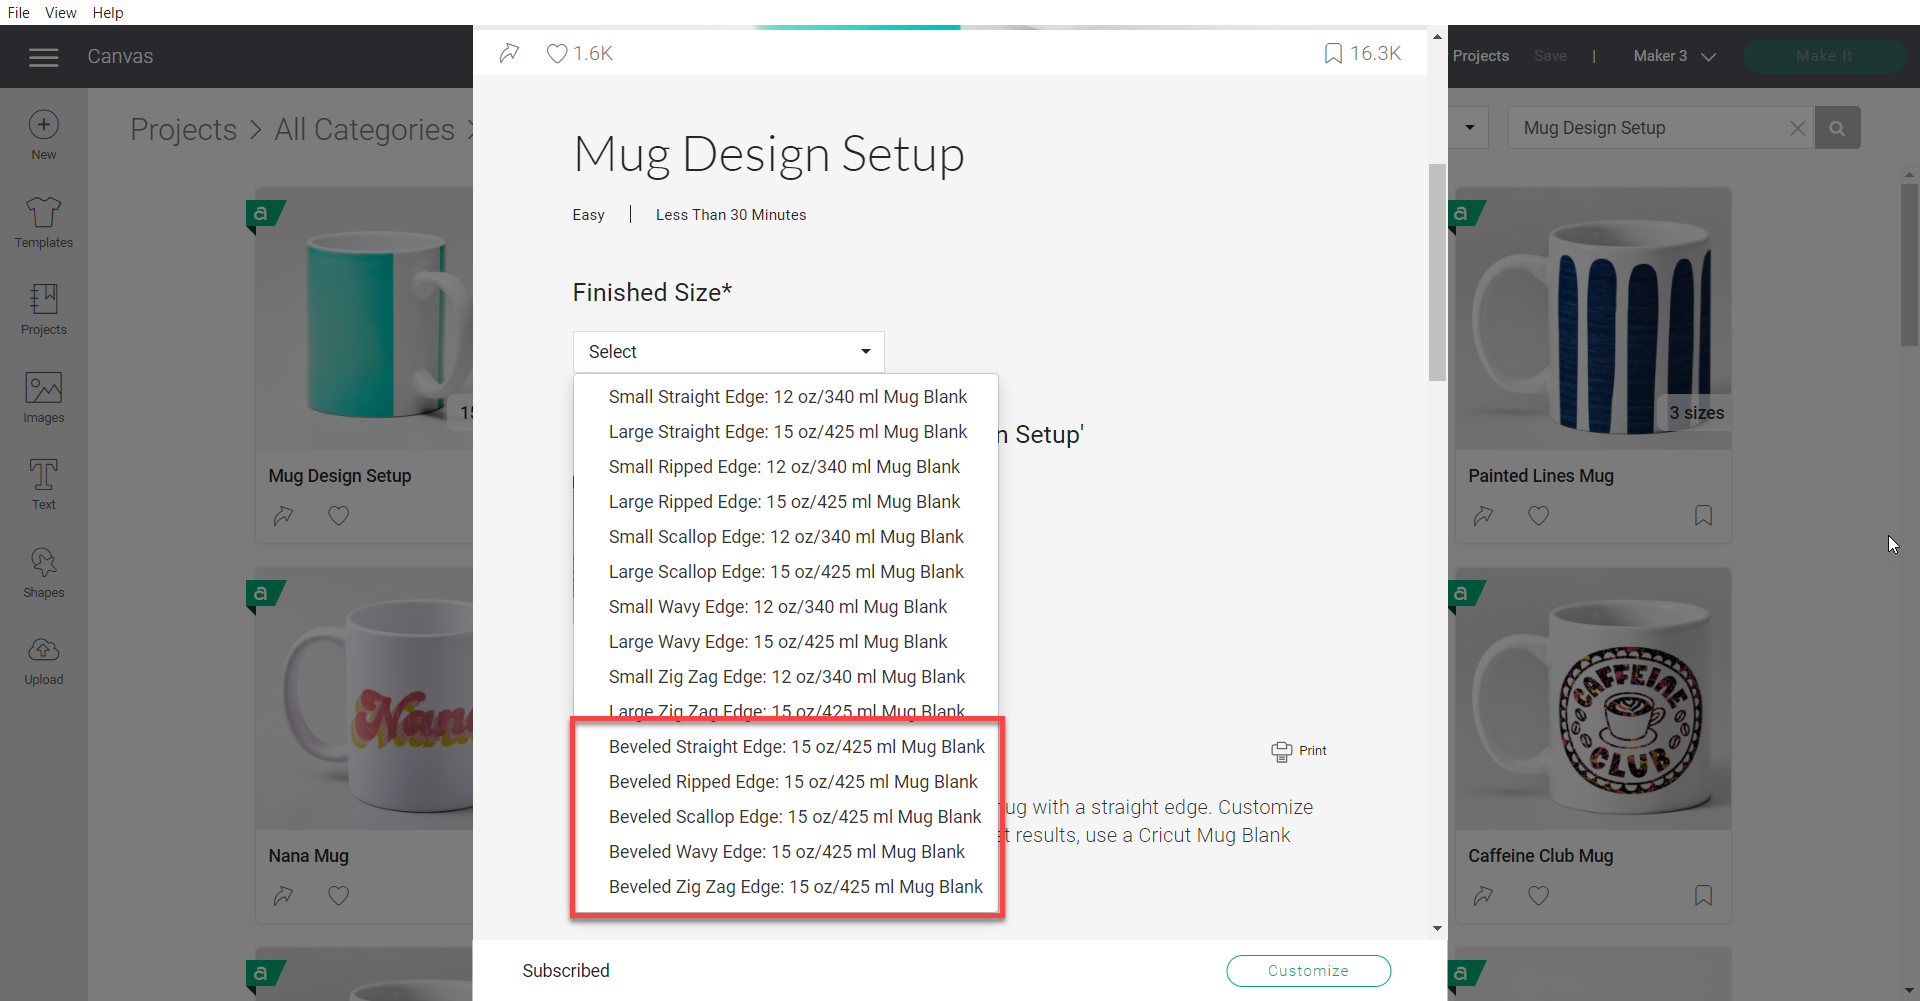 Project_List_Mug_Design_Setup.png